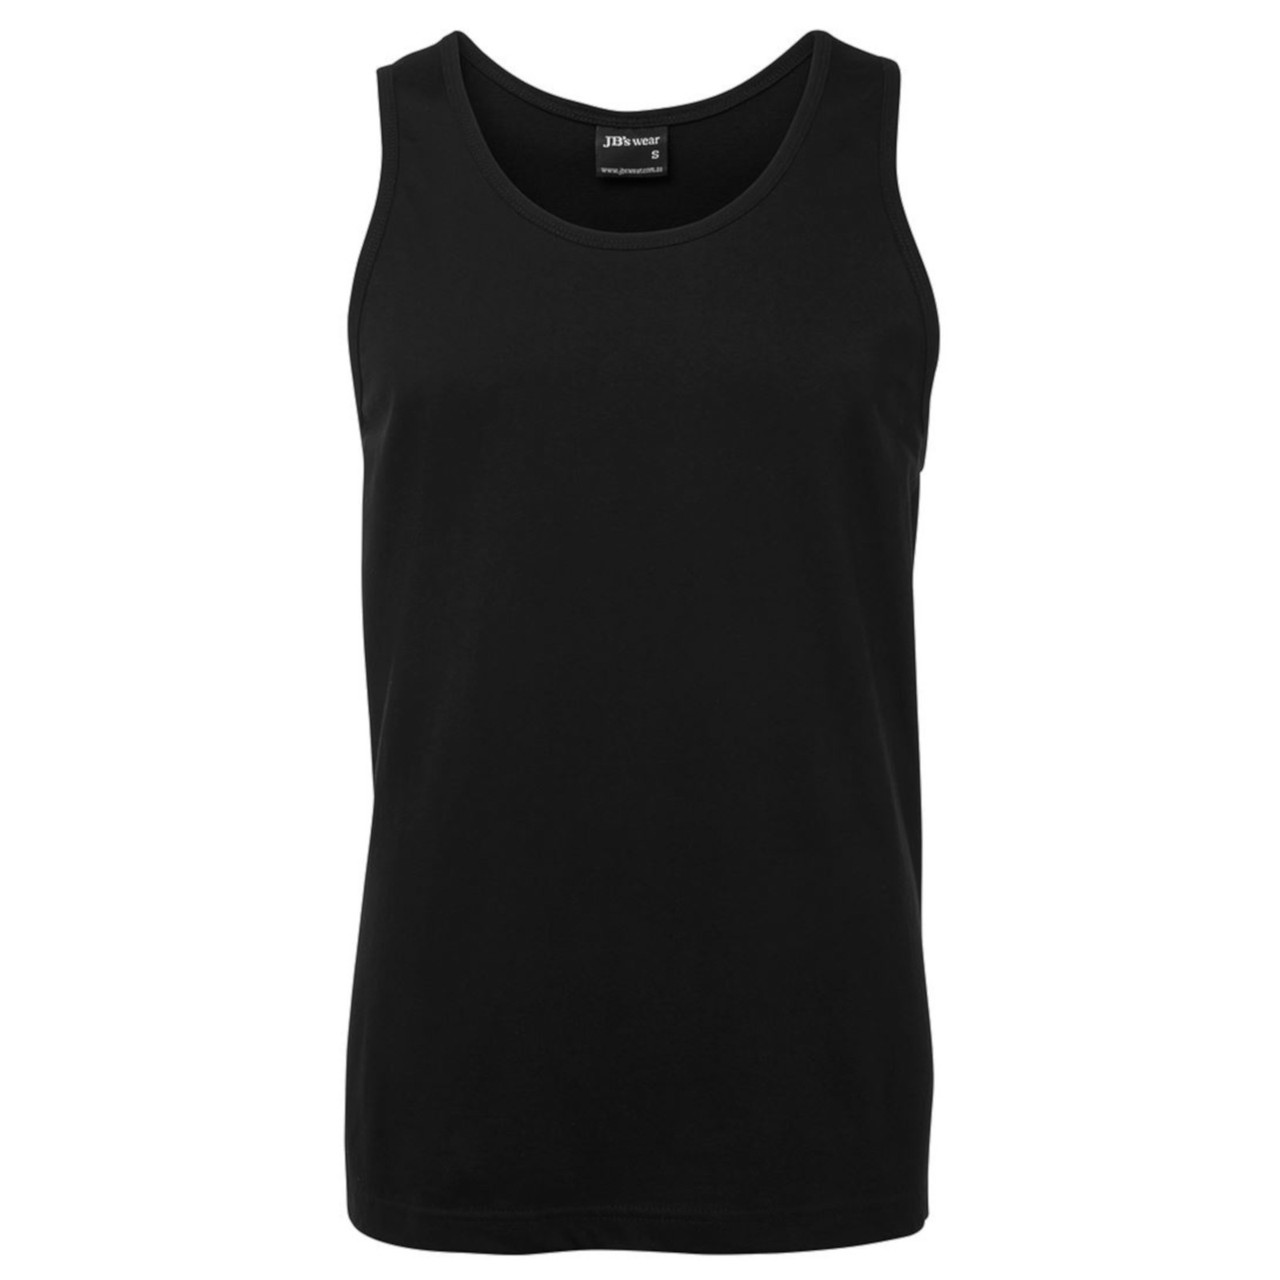 VINCE | 100% cotton tank top | mens blank singlet | plain gym clothing